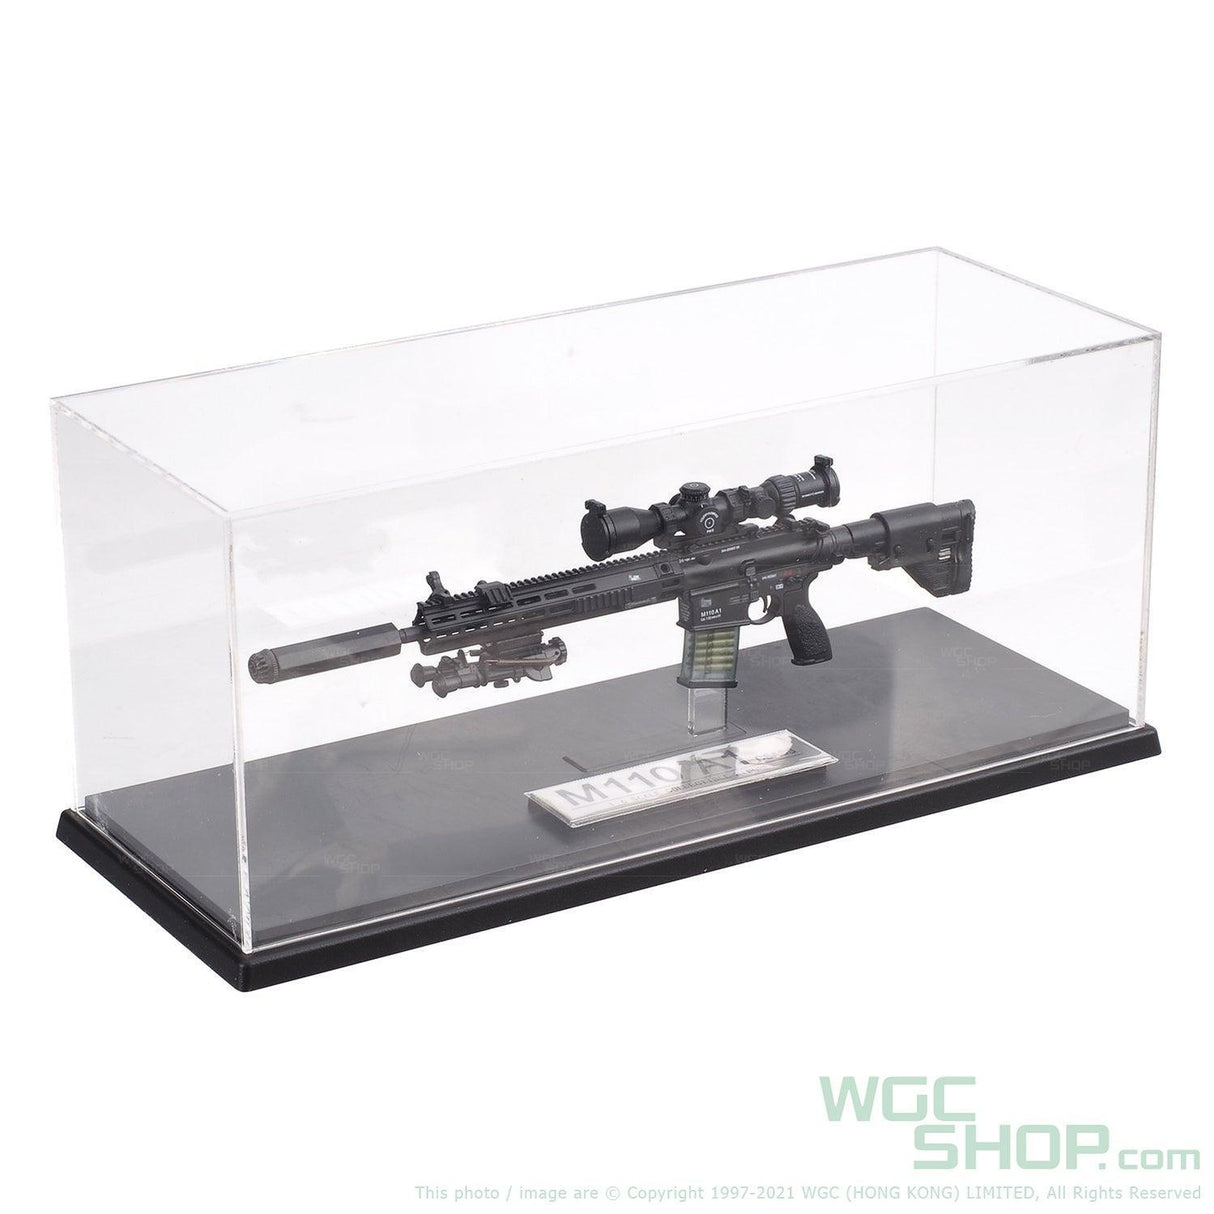 SMG MODEL 1/6 M110A1 CSASS - Black - WGC Shop